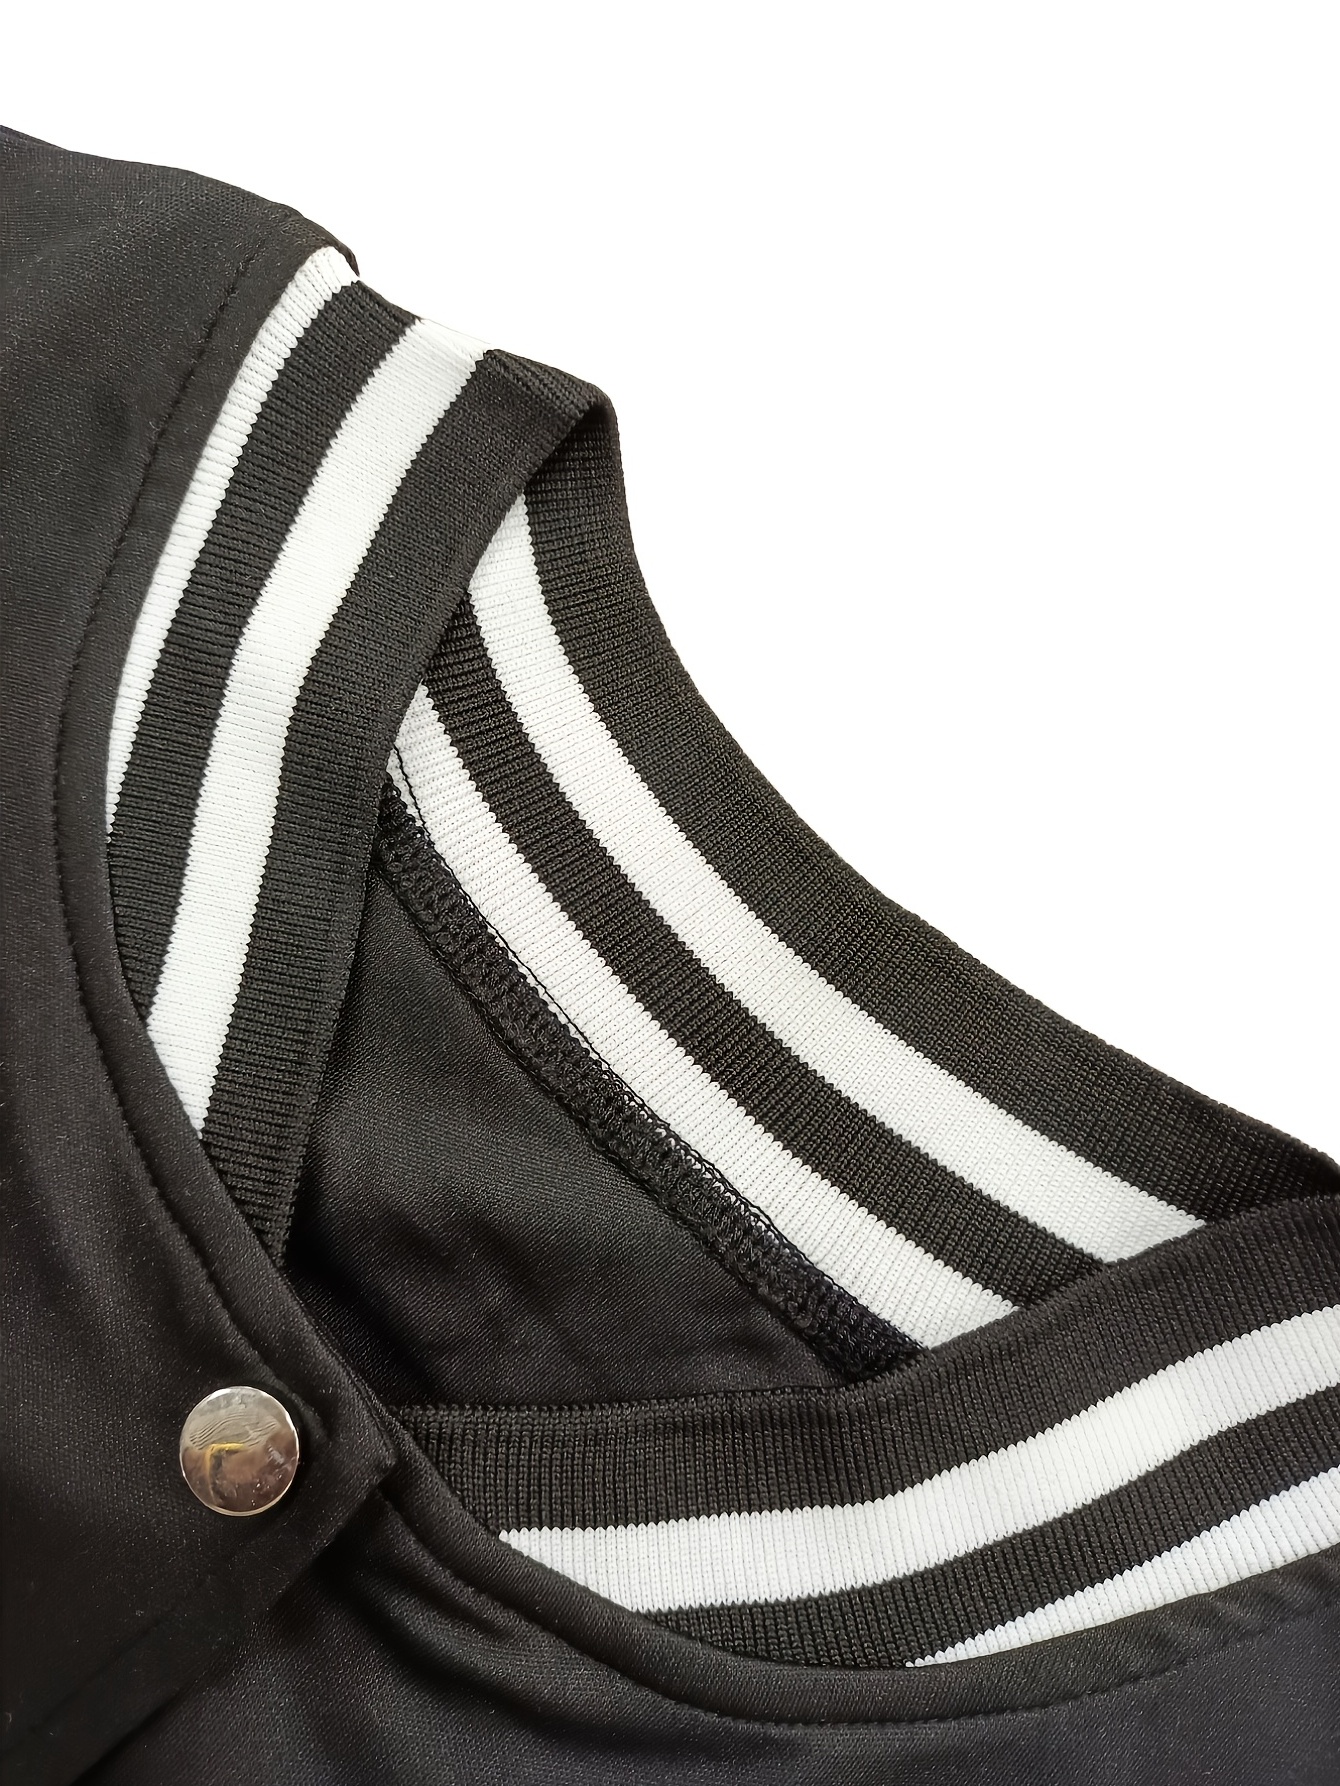 Women's Varsity Striped Crop Top & Leggings 2-Piece Set, Black/White, S/M